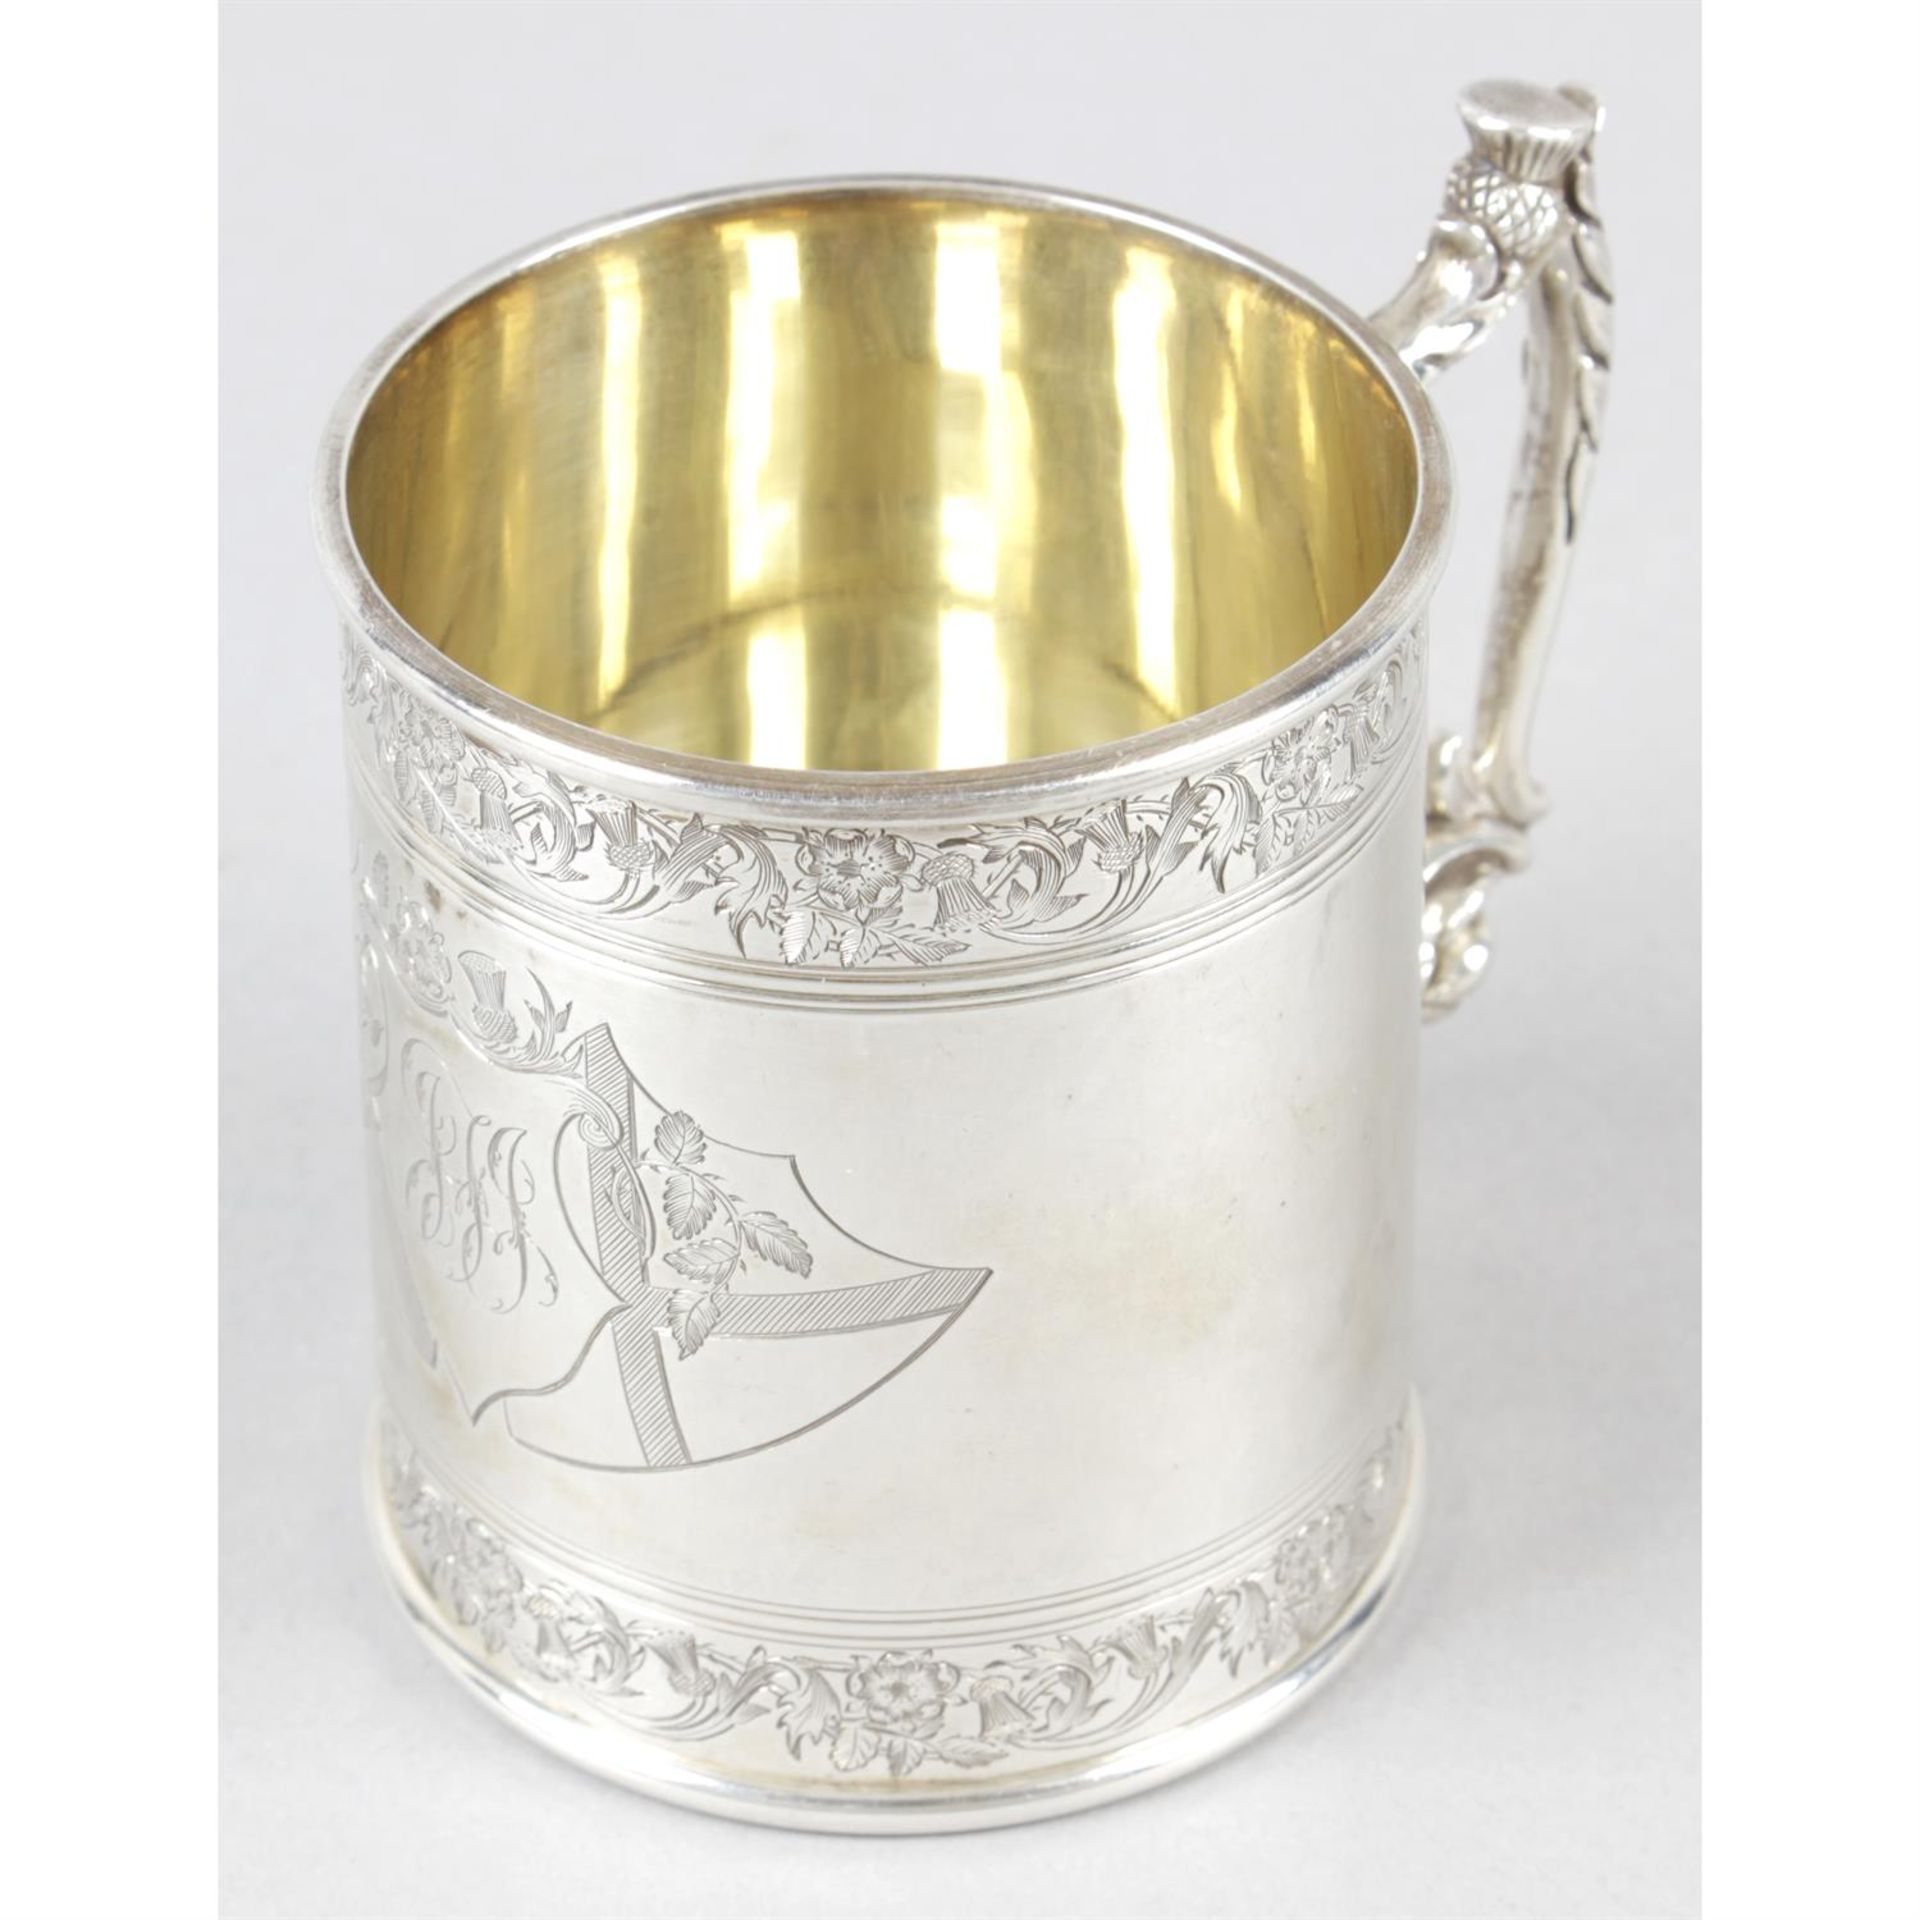 A George V silver christening mug.